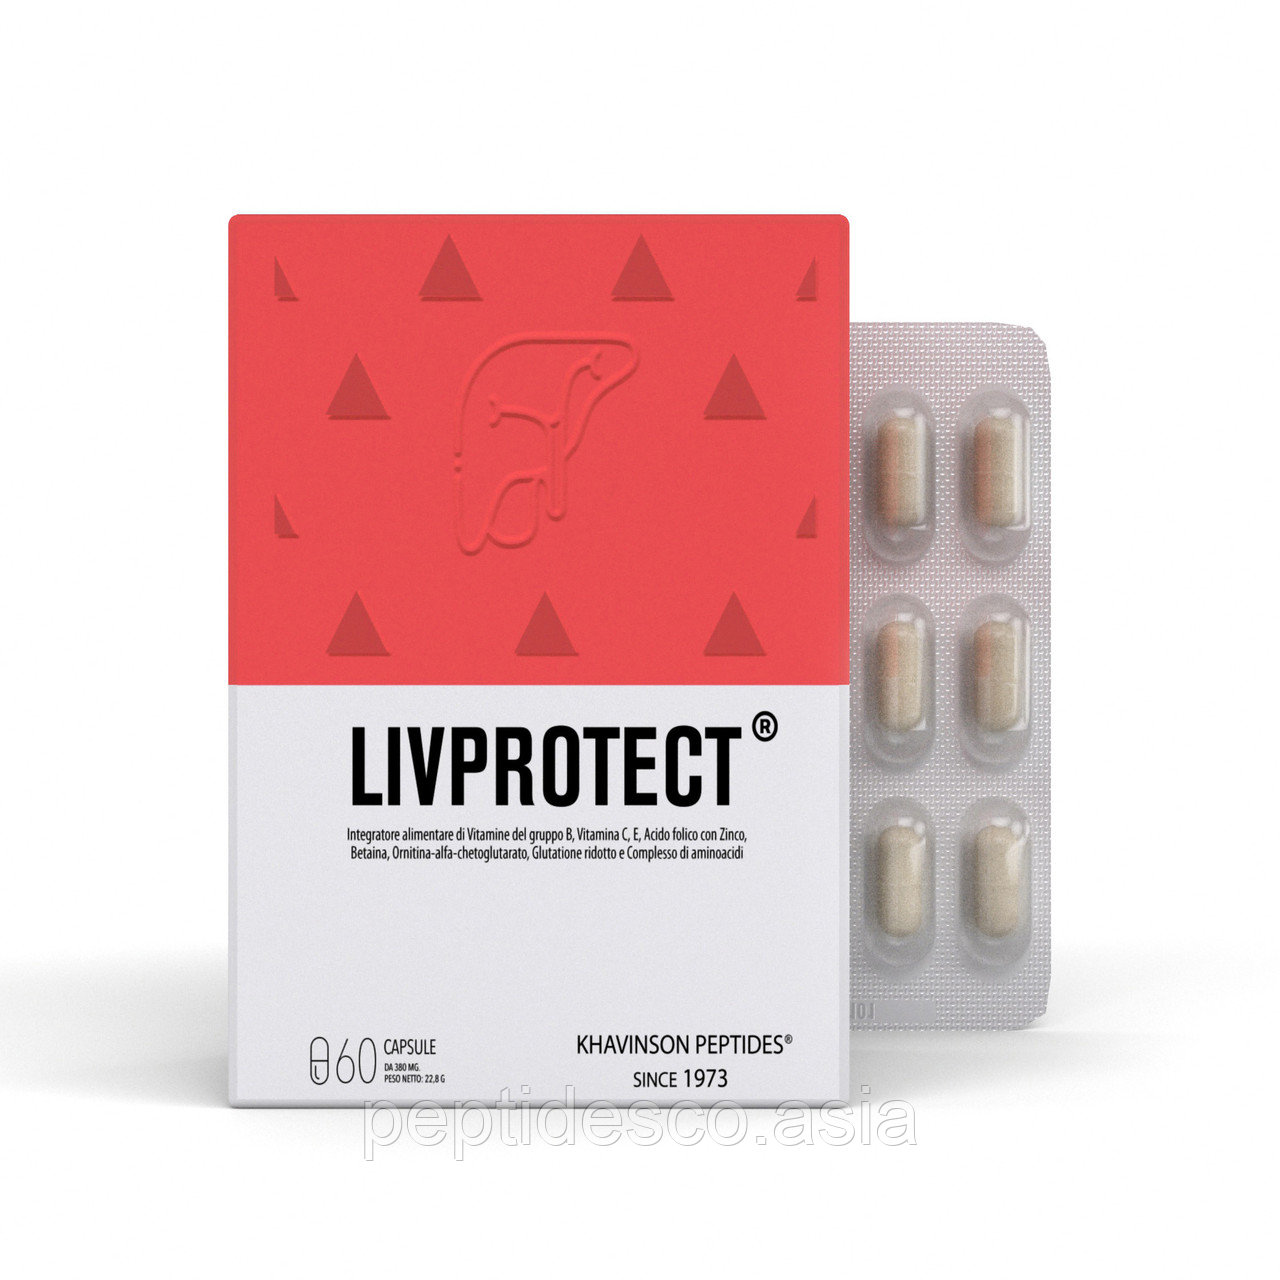 Ливпротект  LIVPROTECT® 60 - пептидный комплекс печени и ЖКТ, Khavinson Peptides®., фото 1